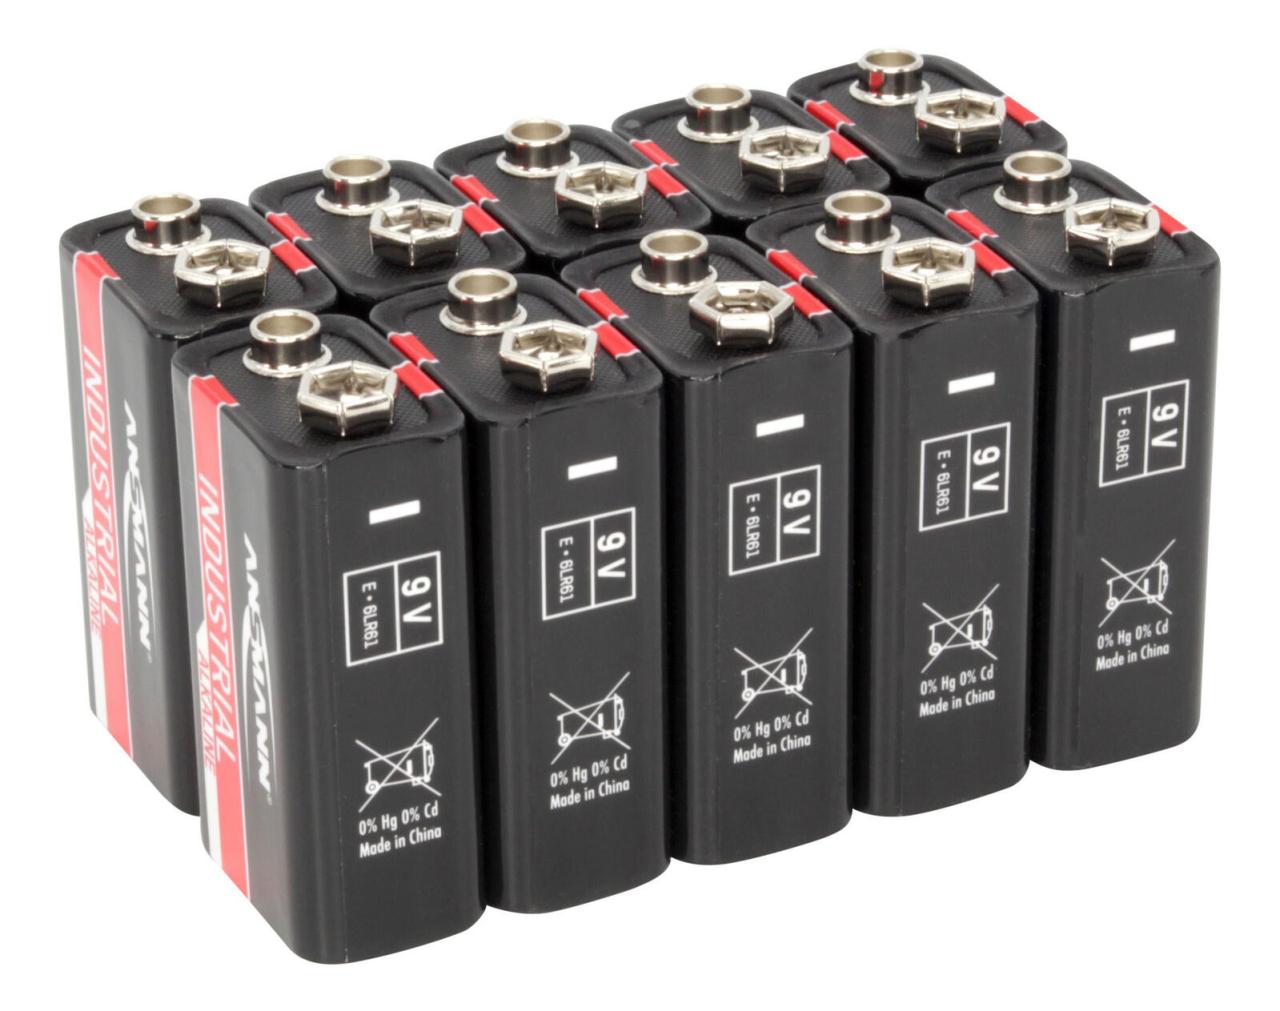 ANSMANN Batterien E-Block 9 V von ANSMANN